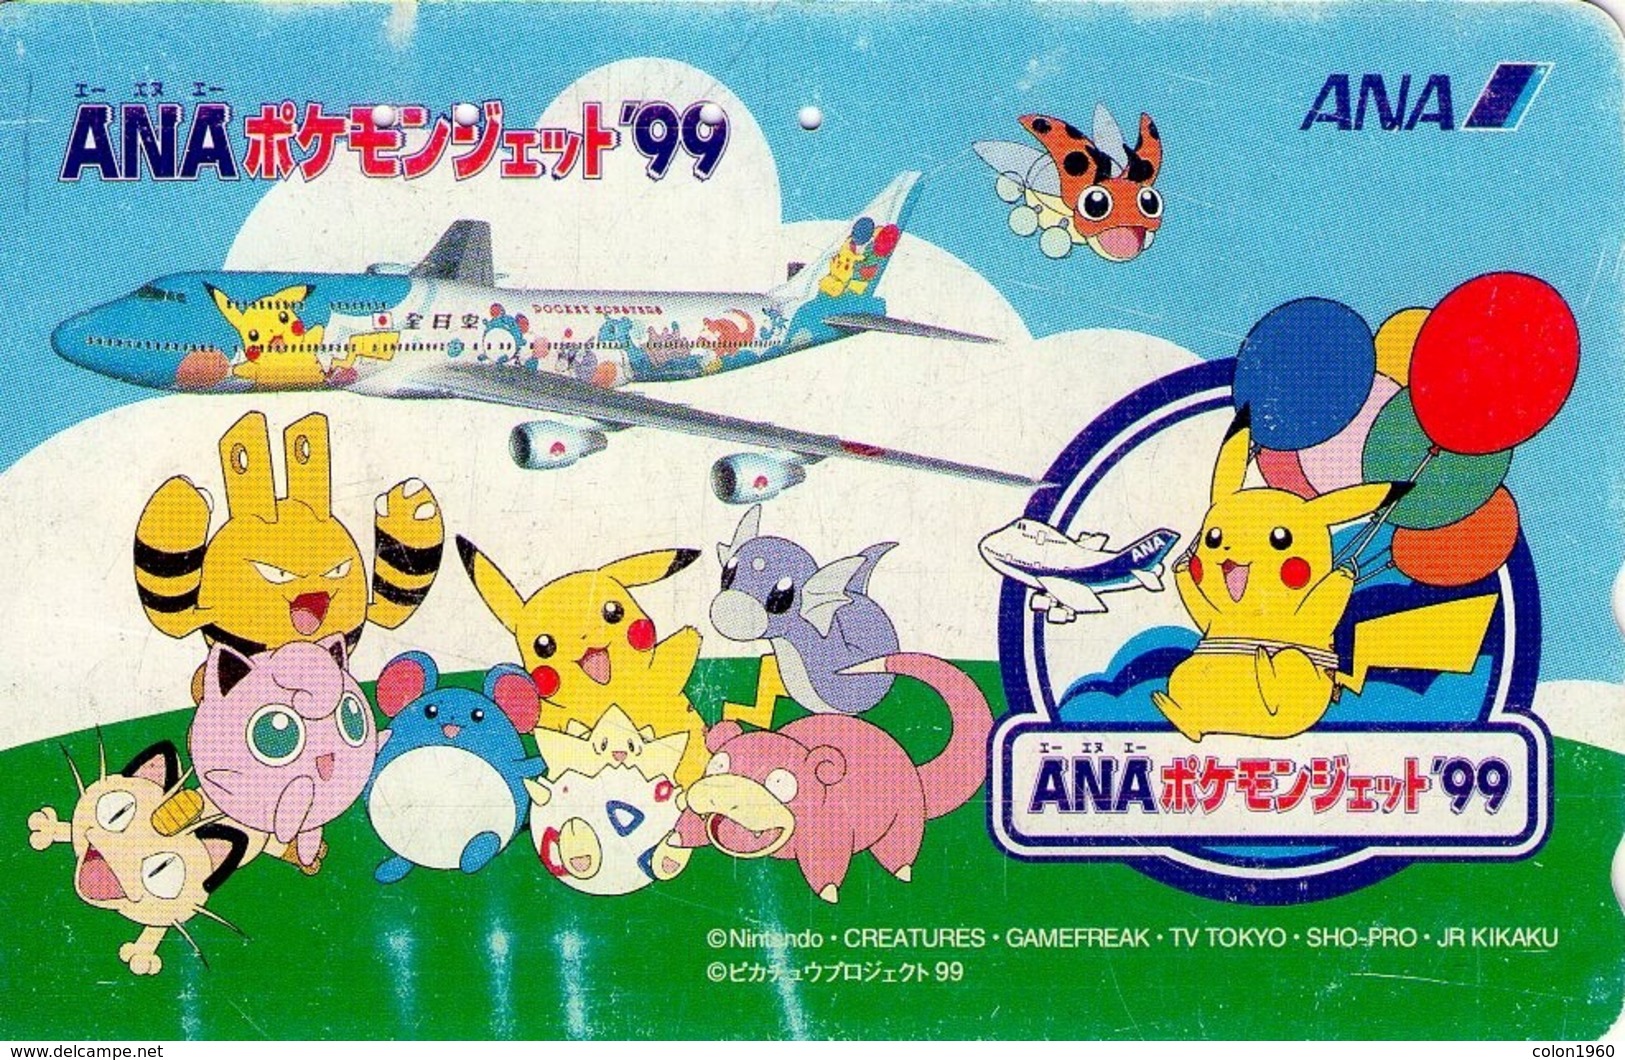 JAPON. COMICS. AVIONES. NINTENDO, ANA. JP-110-016-ANA-056. (096) - Aviones